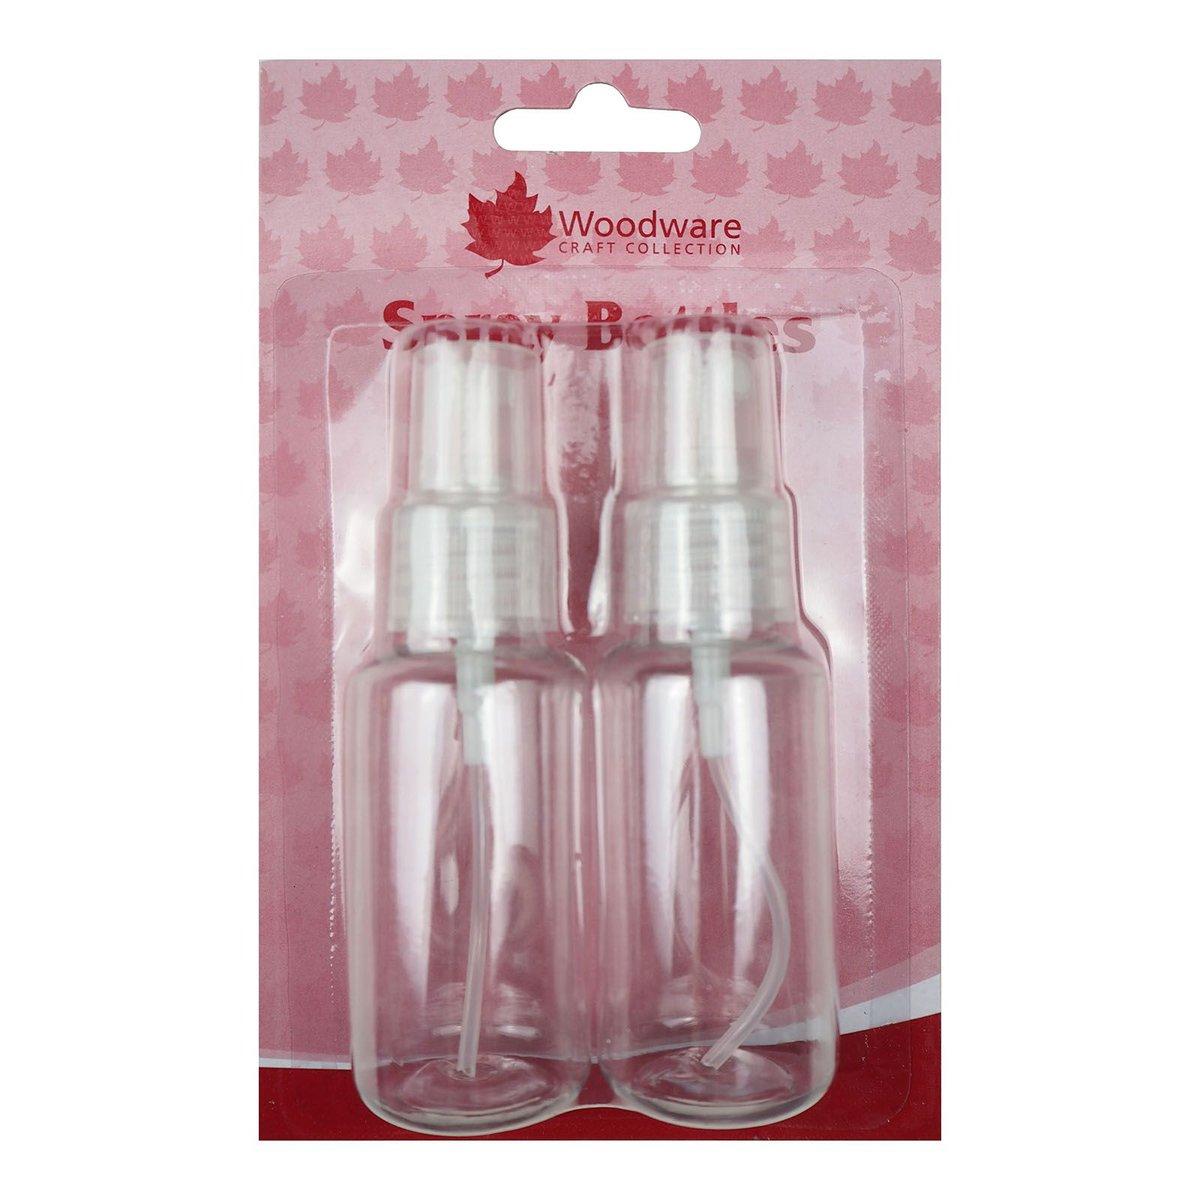 Woodware | Spray bottles 2pieces